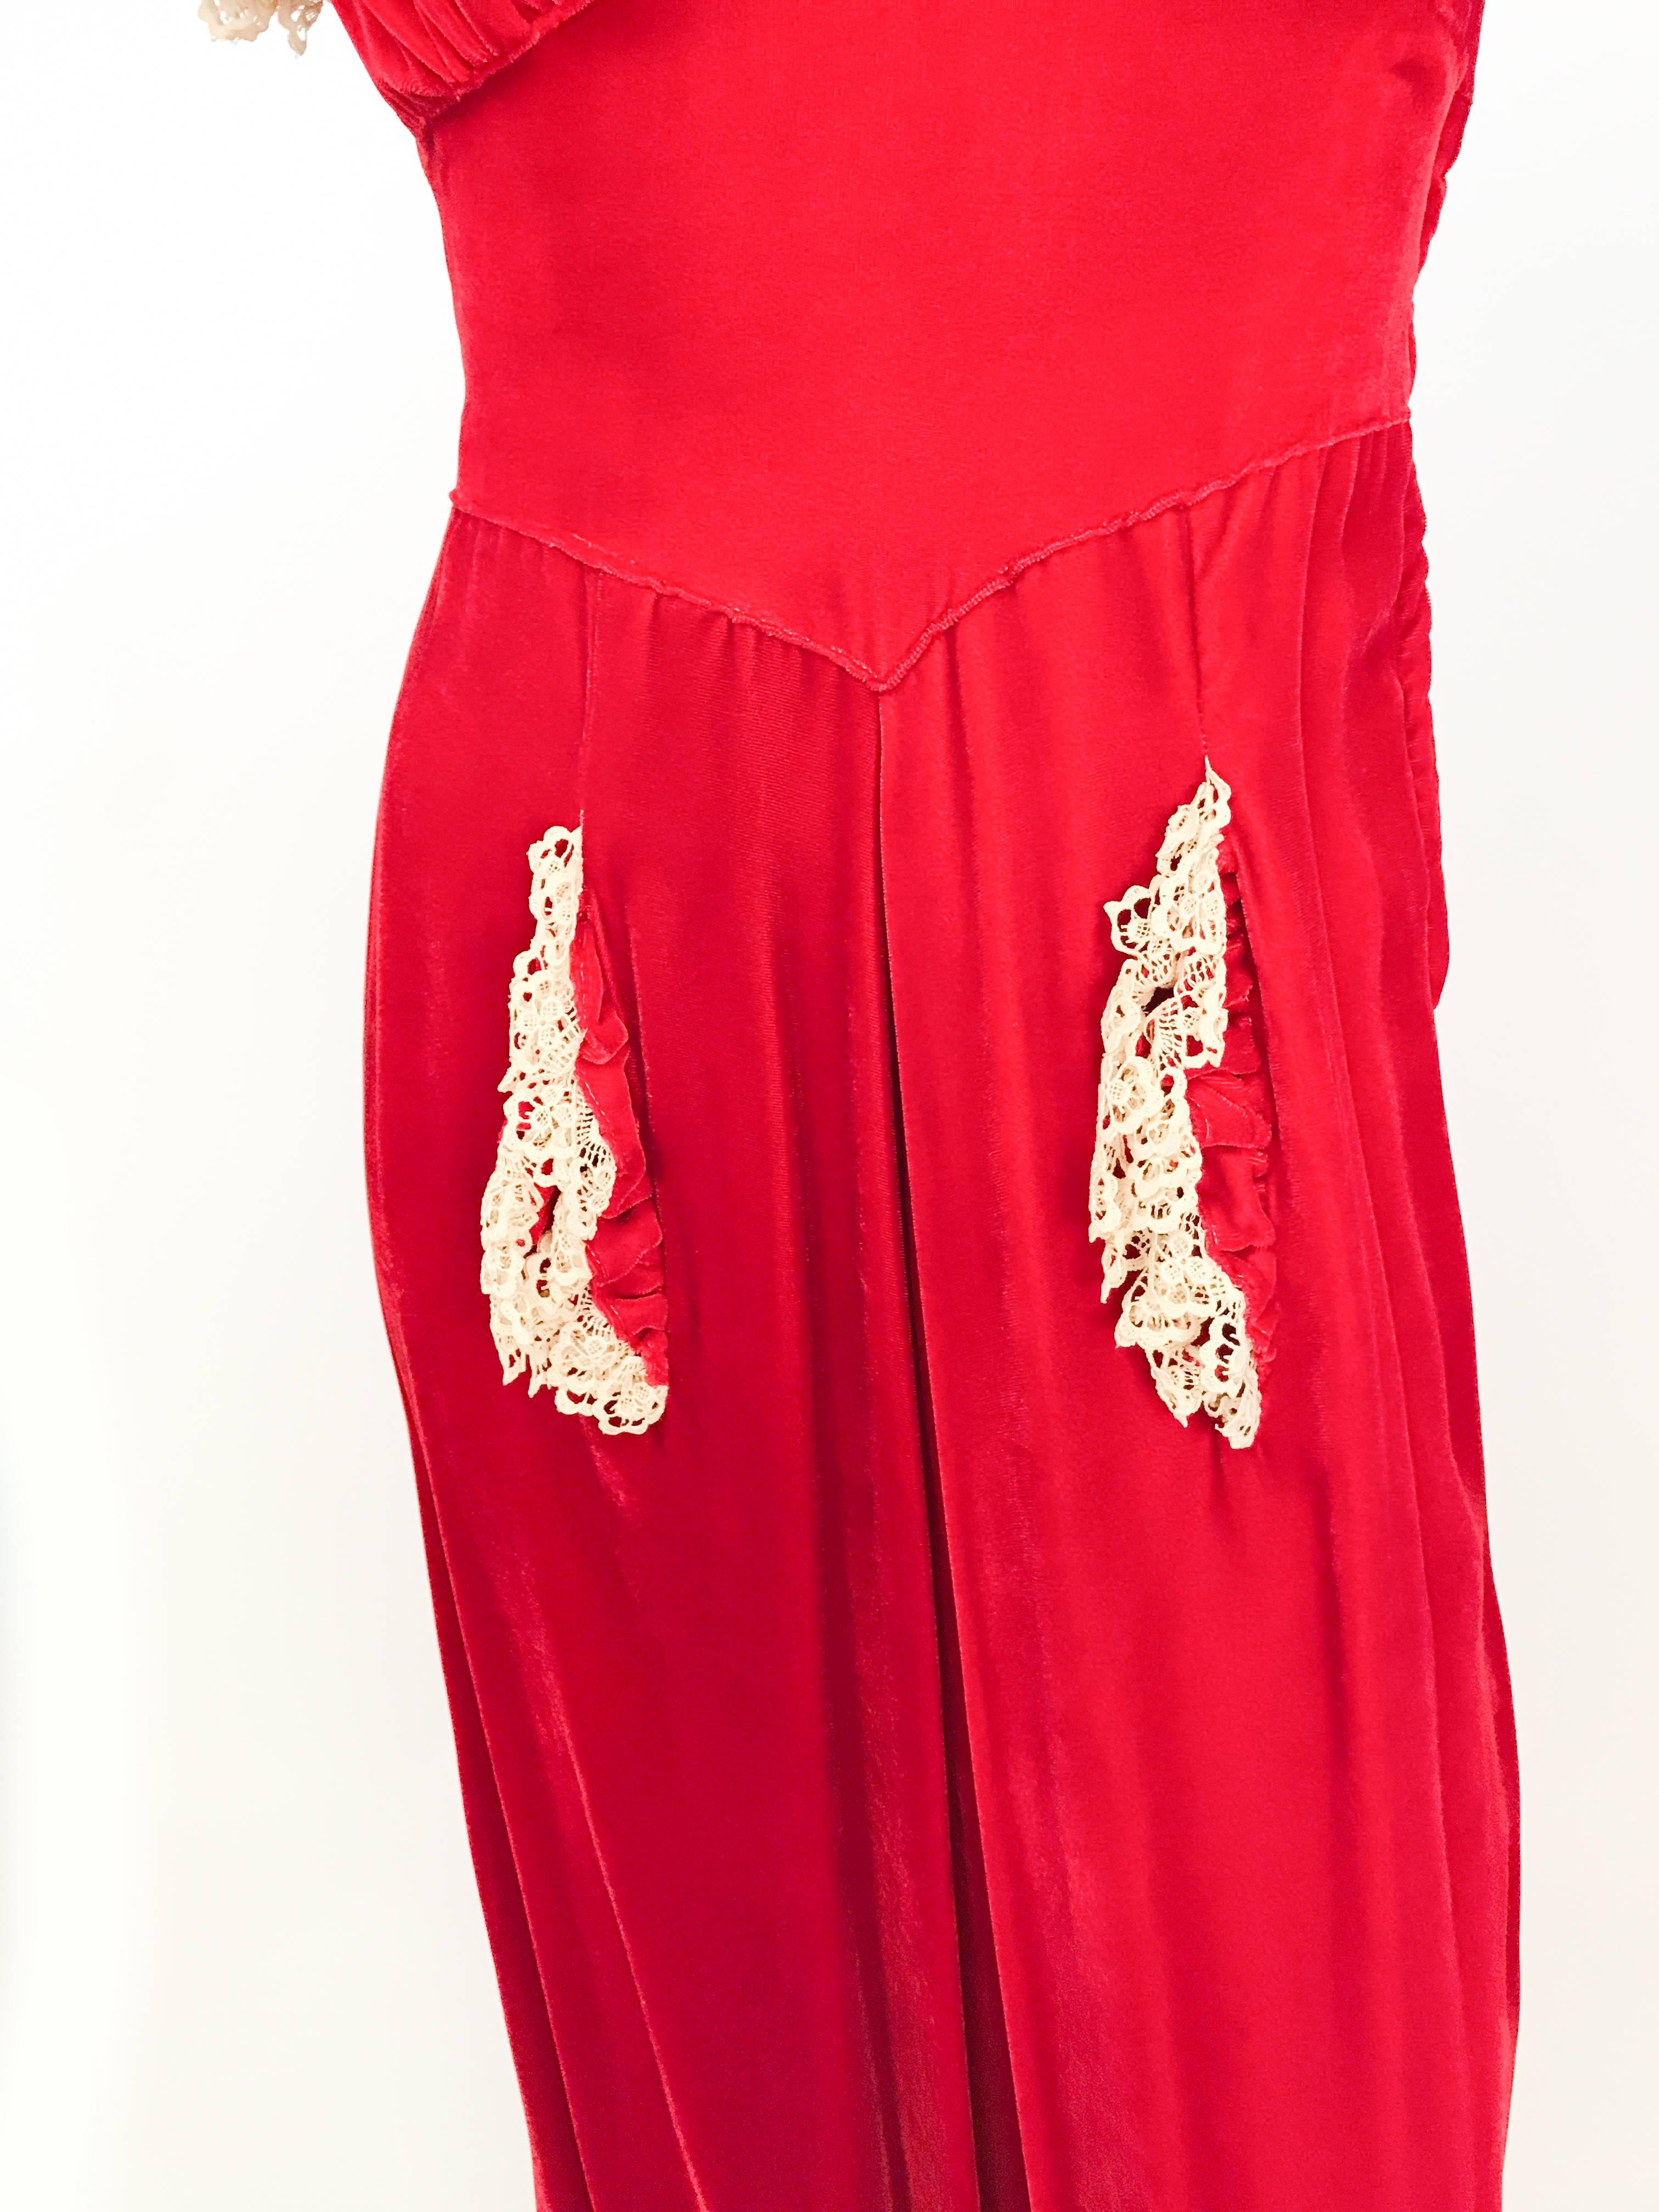 1930s red dress